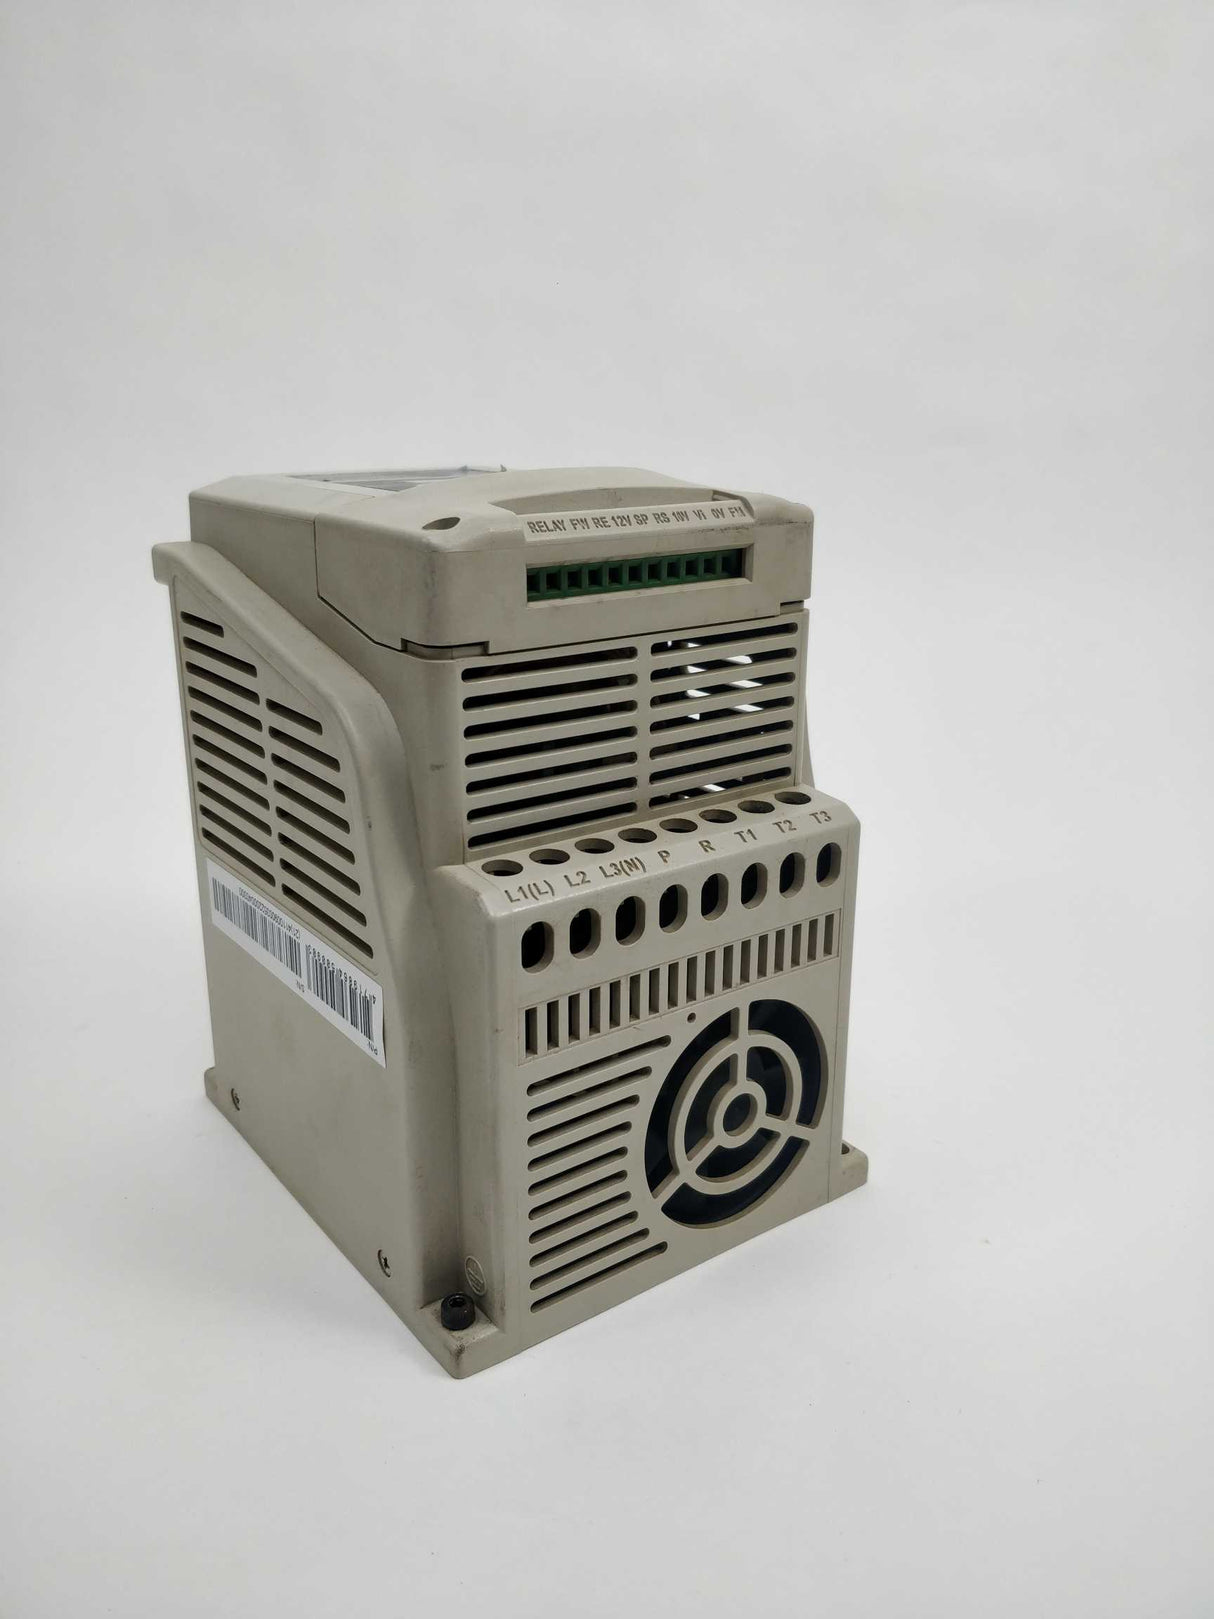 Teco Electric & Machinery MDRV-4015 IGBT PWM Inverter